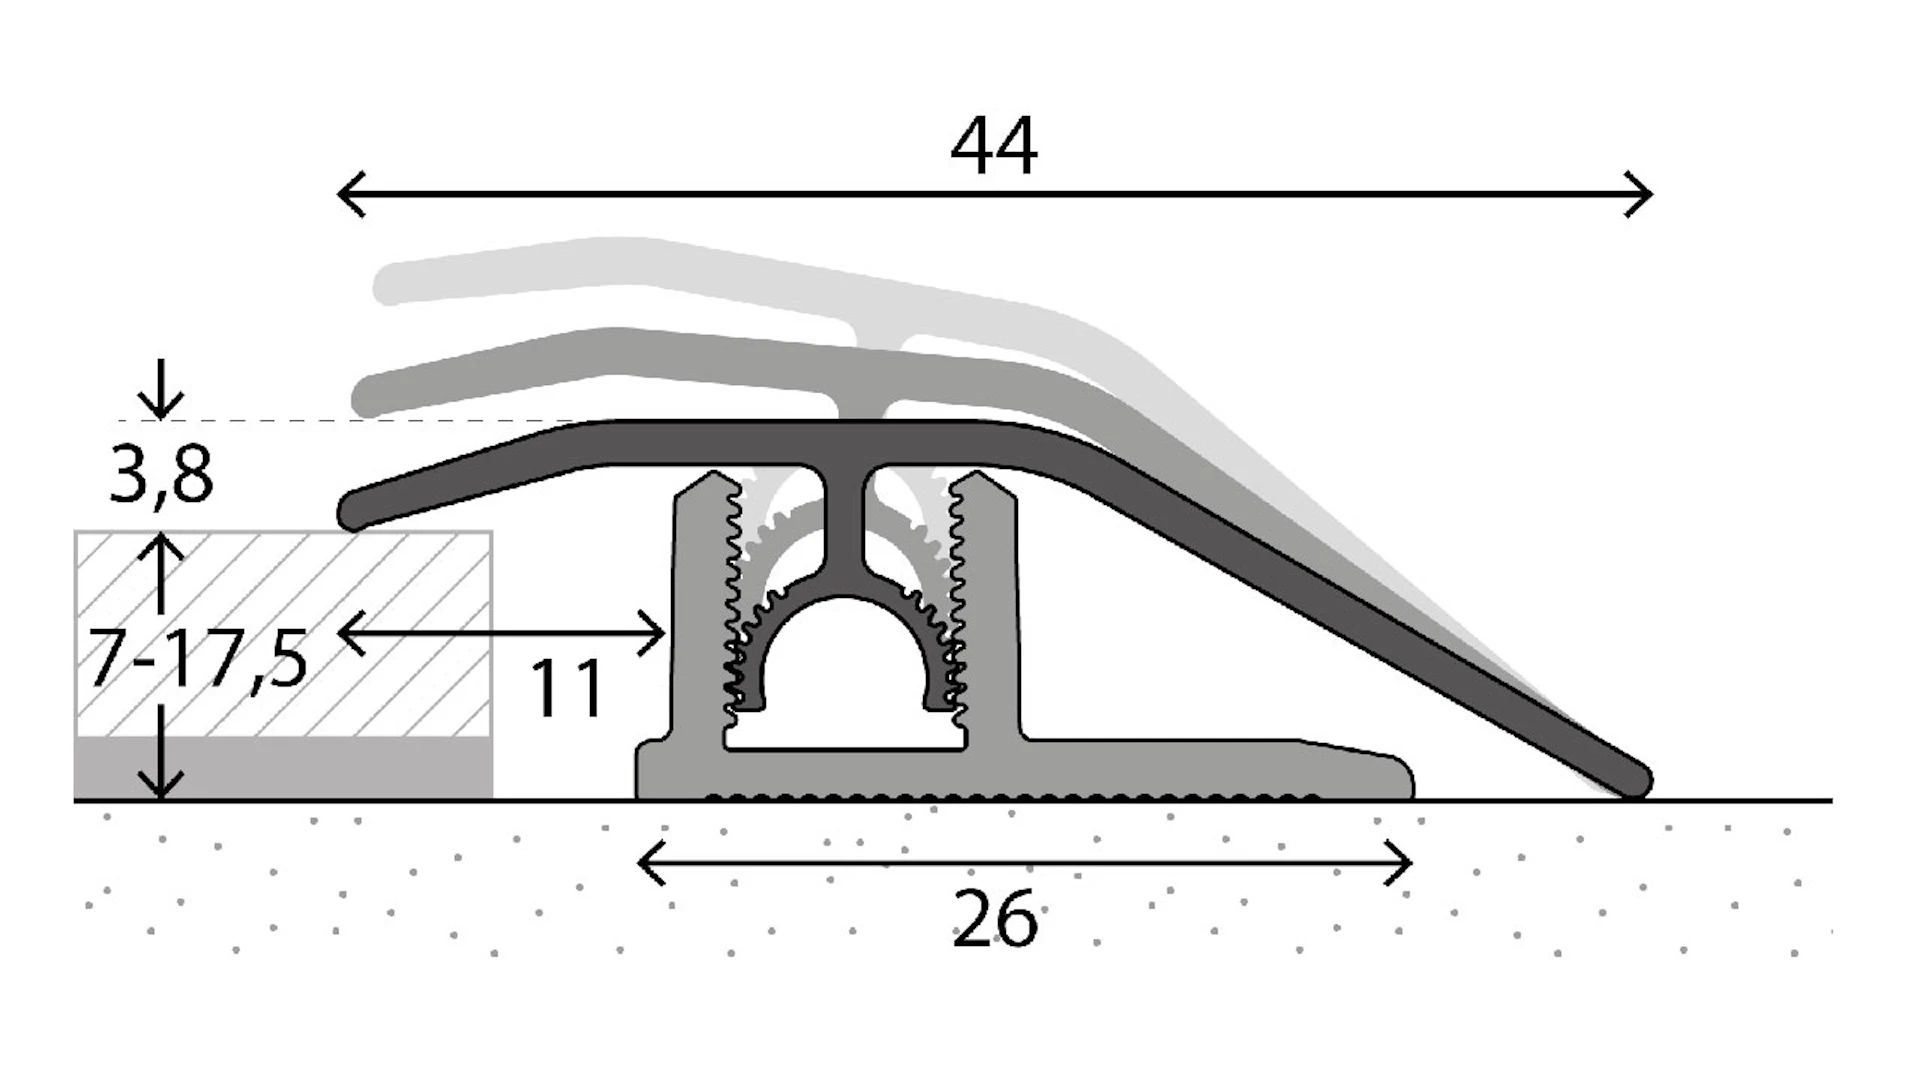 Prinz Profi-Tec MASTER profil de réglage 2700 mm acier inoxydable mat